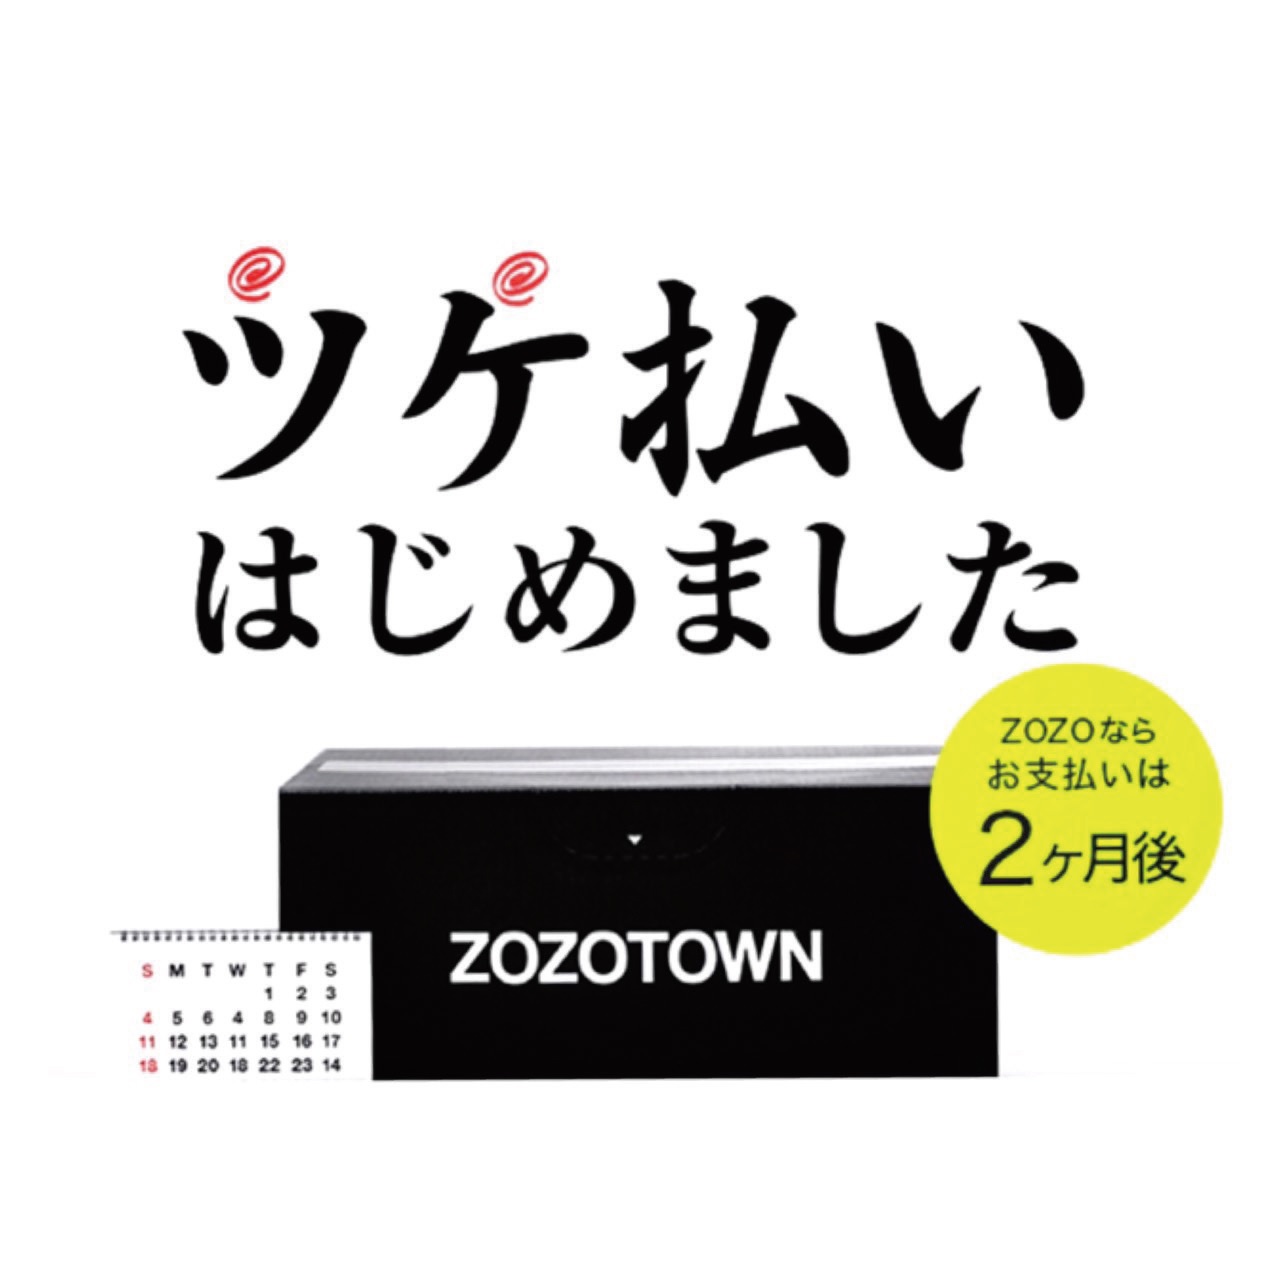 Zozotownの決済サービス ツケ払い 20 30代を中心に幅広い顧客が利用 スタートトゥデイ ペイメントナビ